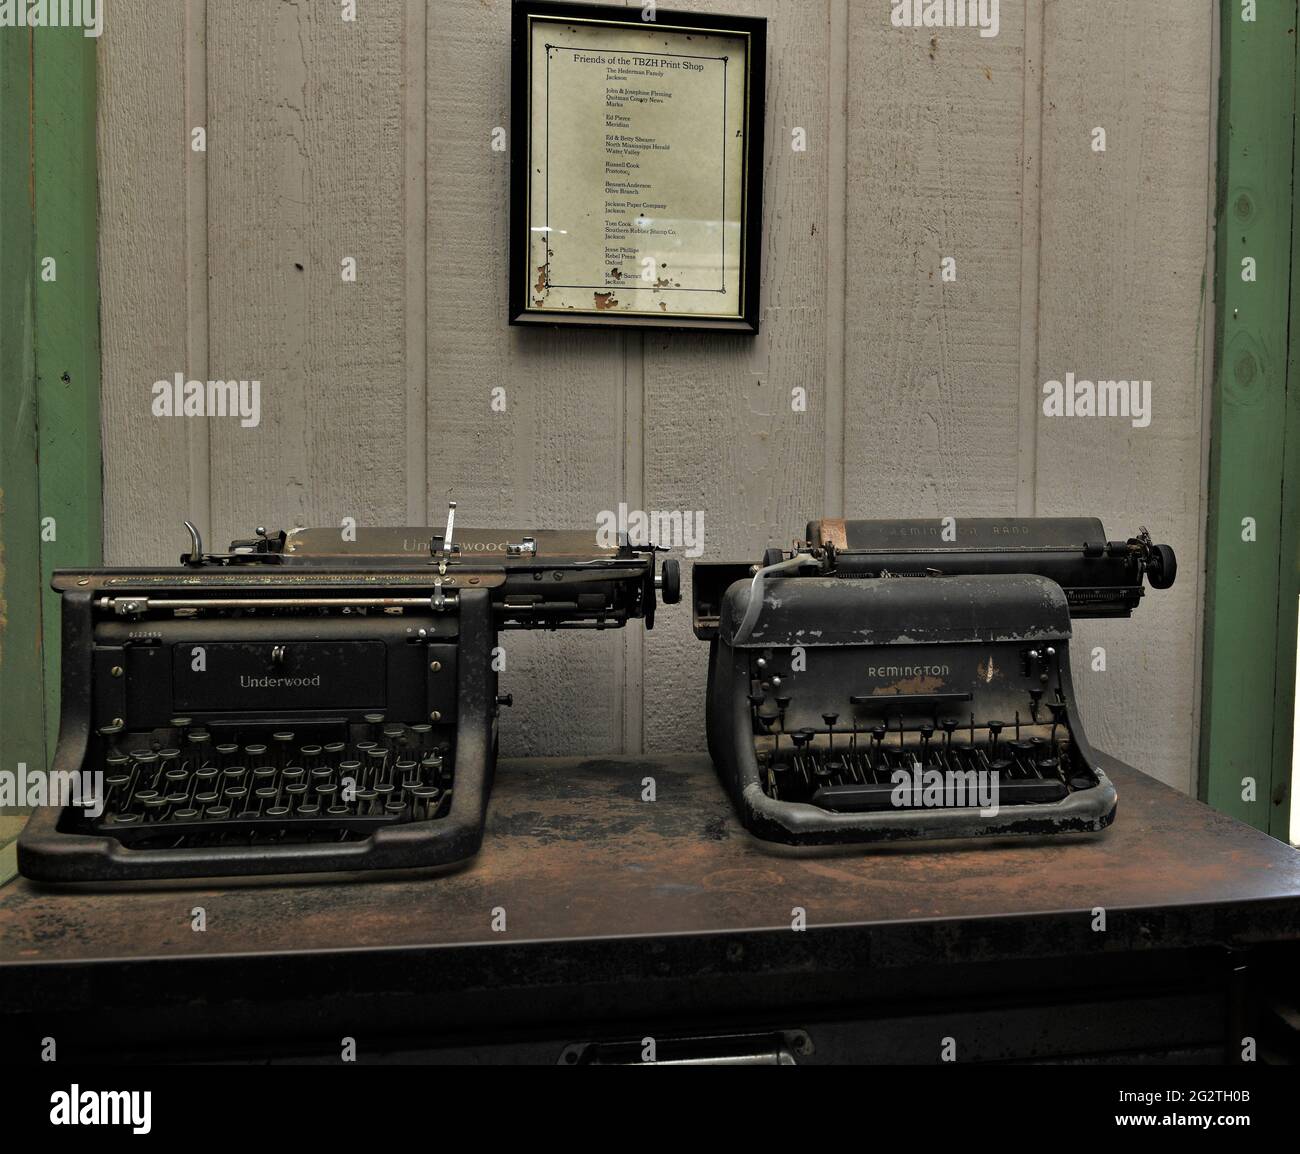 Vintage typewriters. Stock Photo